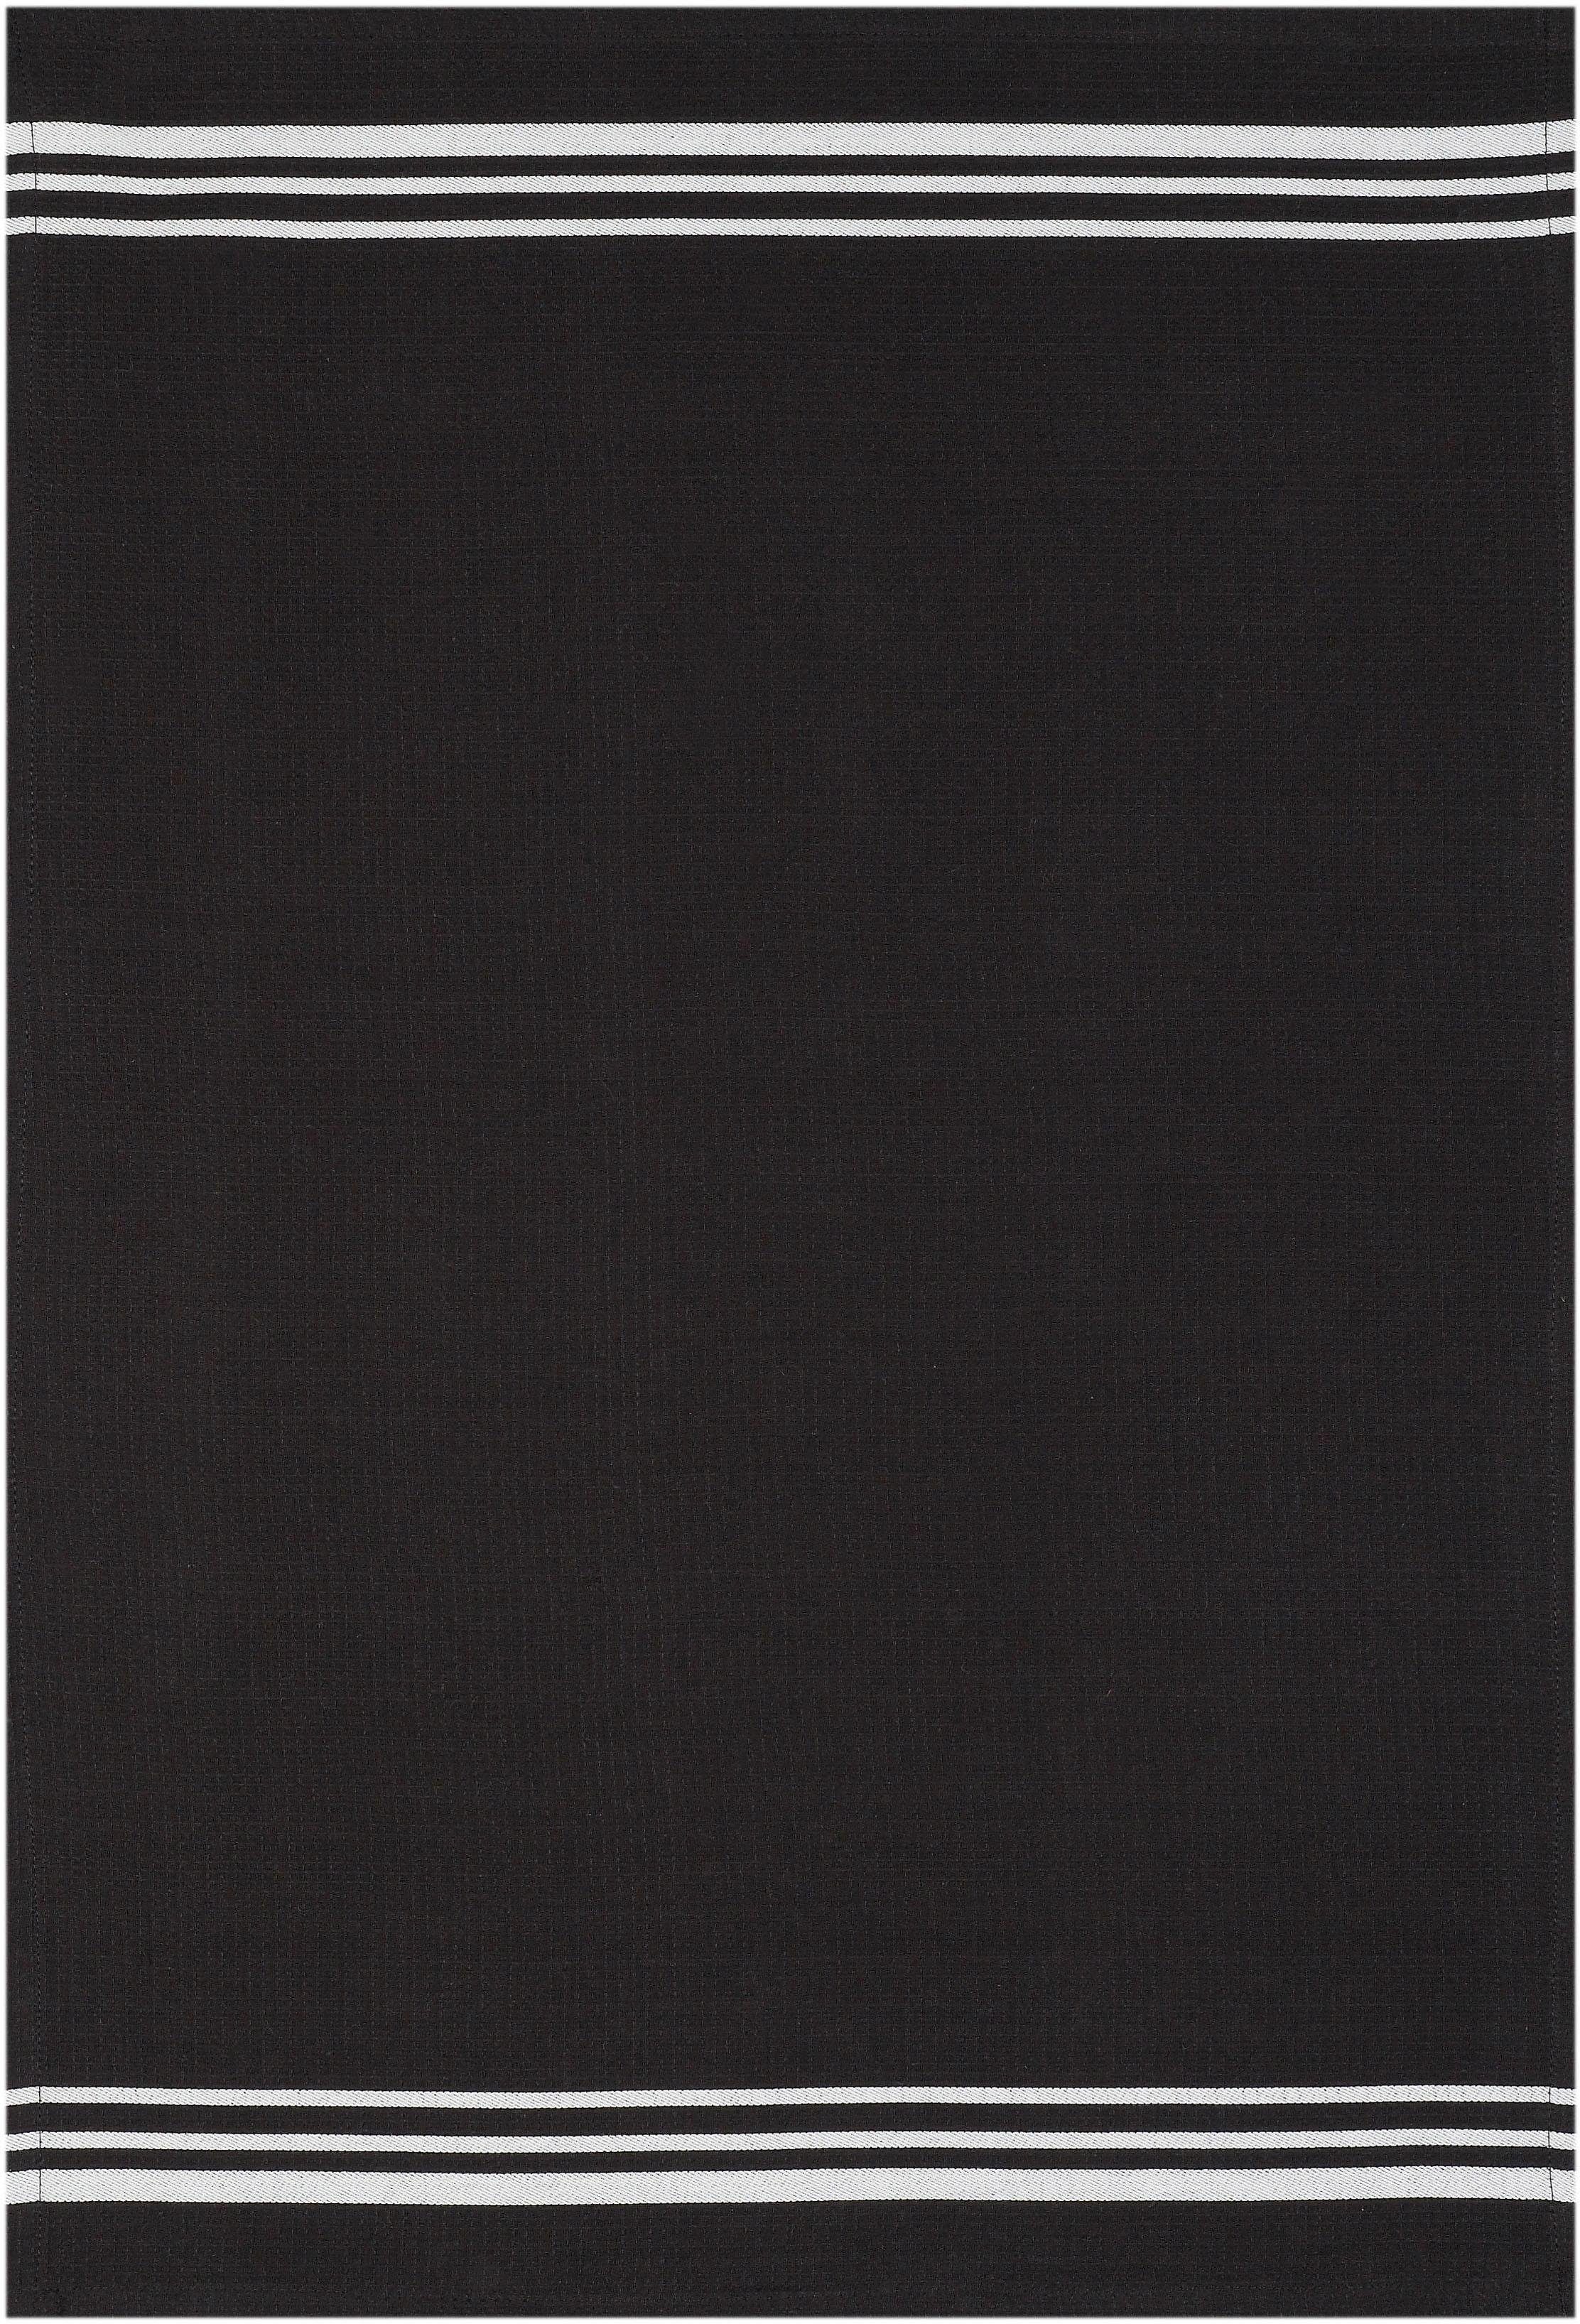 Geschirrtuch (Set, 3-tlg) farbig, schwarz/weiß Waffel, stuco